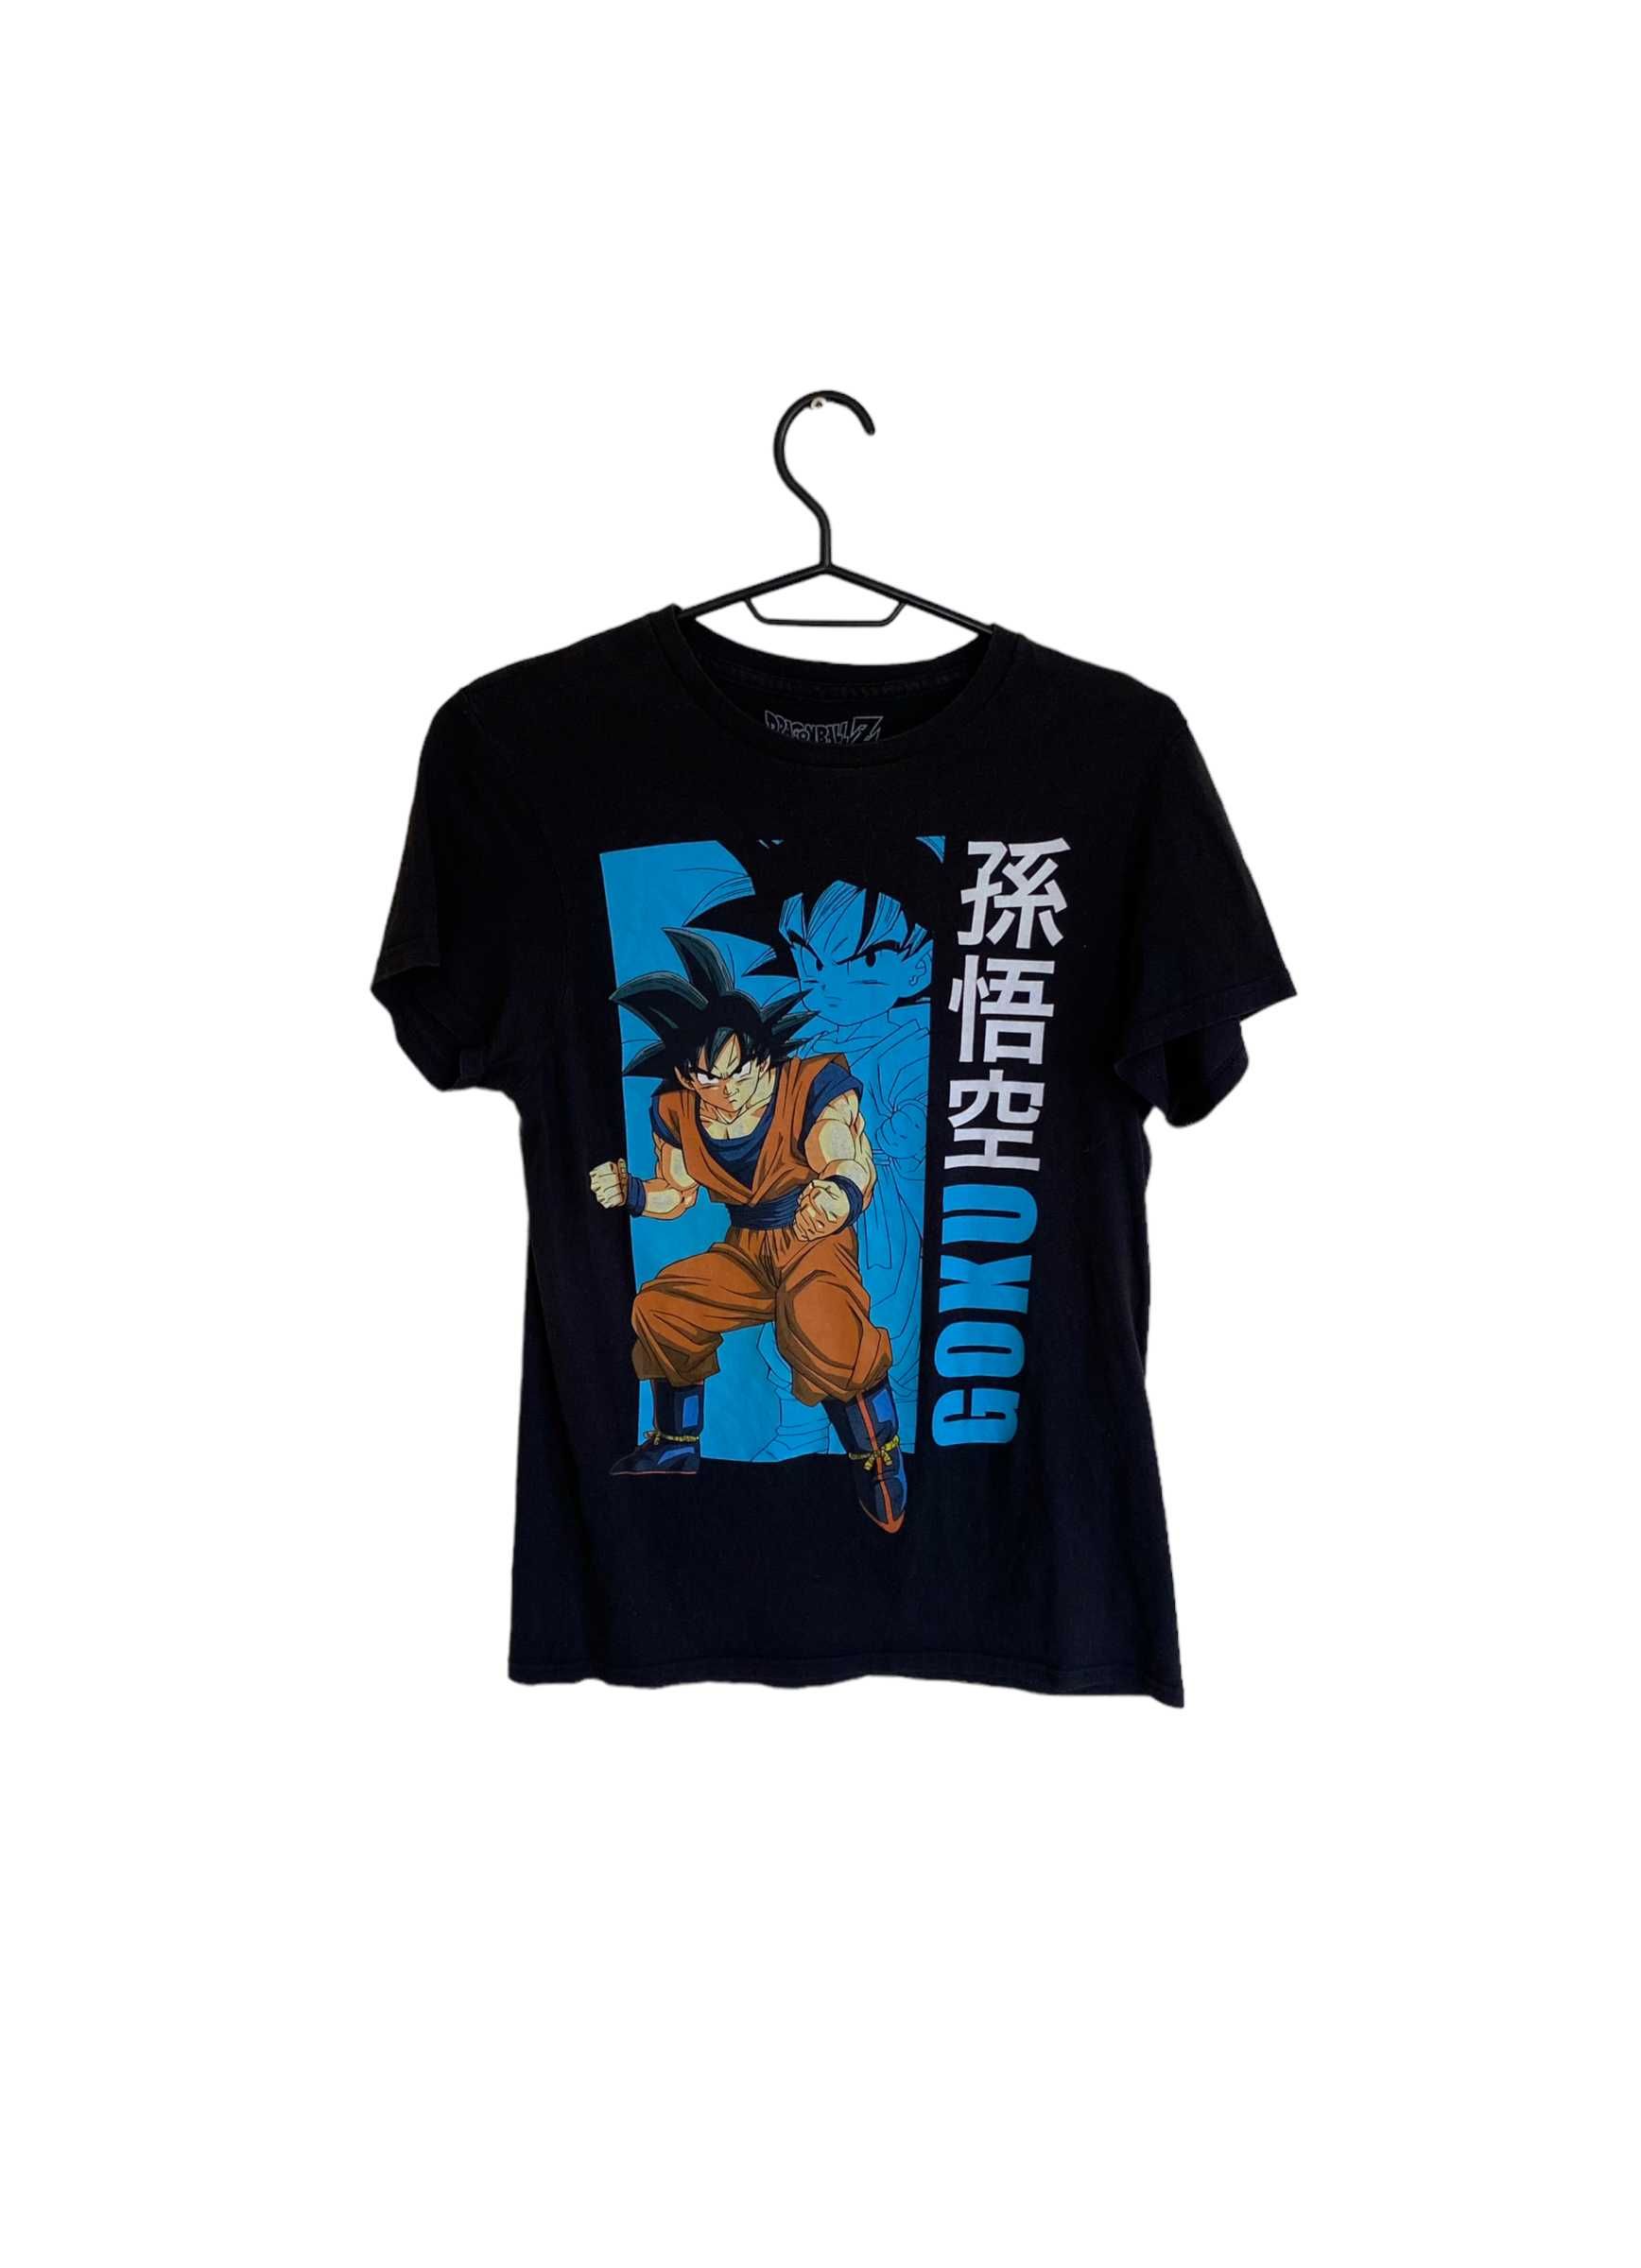 Dragon  Ball Z vintage t-shirt, rozmiar S, stan bardzo dobry